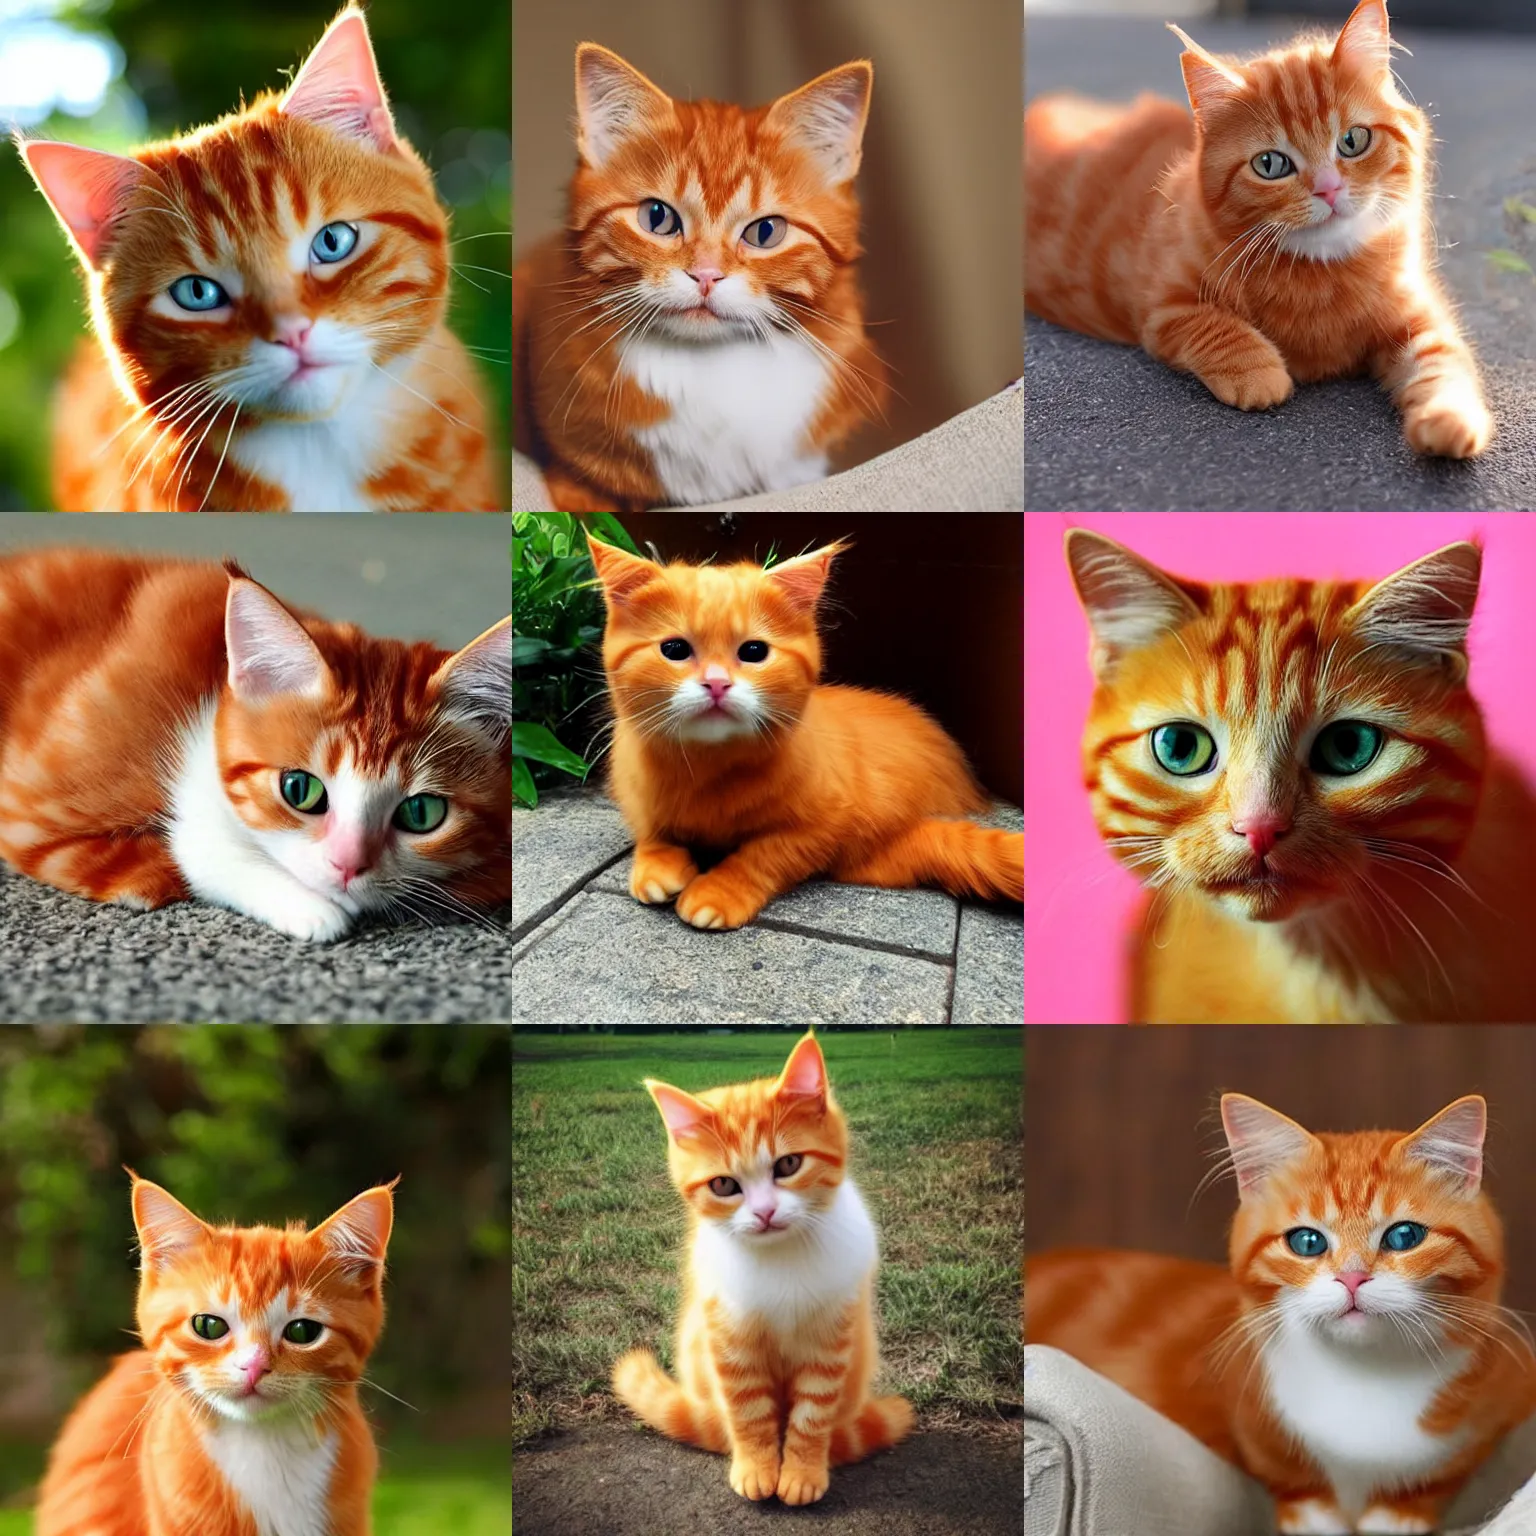 Prompt: cute ginger cat